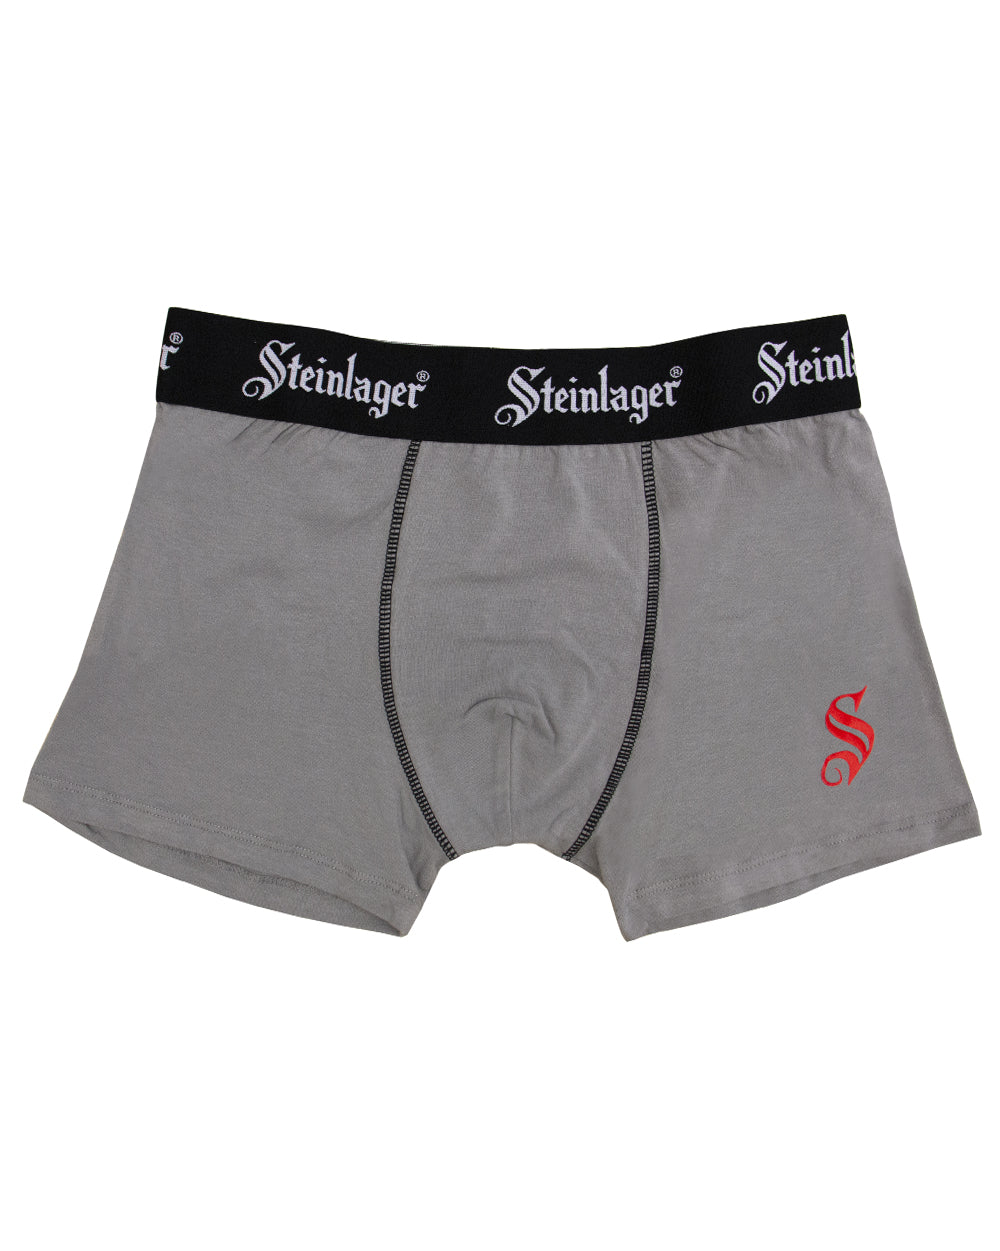 Steinlager Boxer Shorts -  Beer Gear Apparel & Merchandise - Speights - Lion Red - VB - Tokyo Dy merch